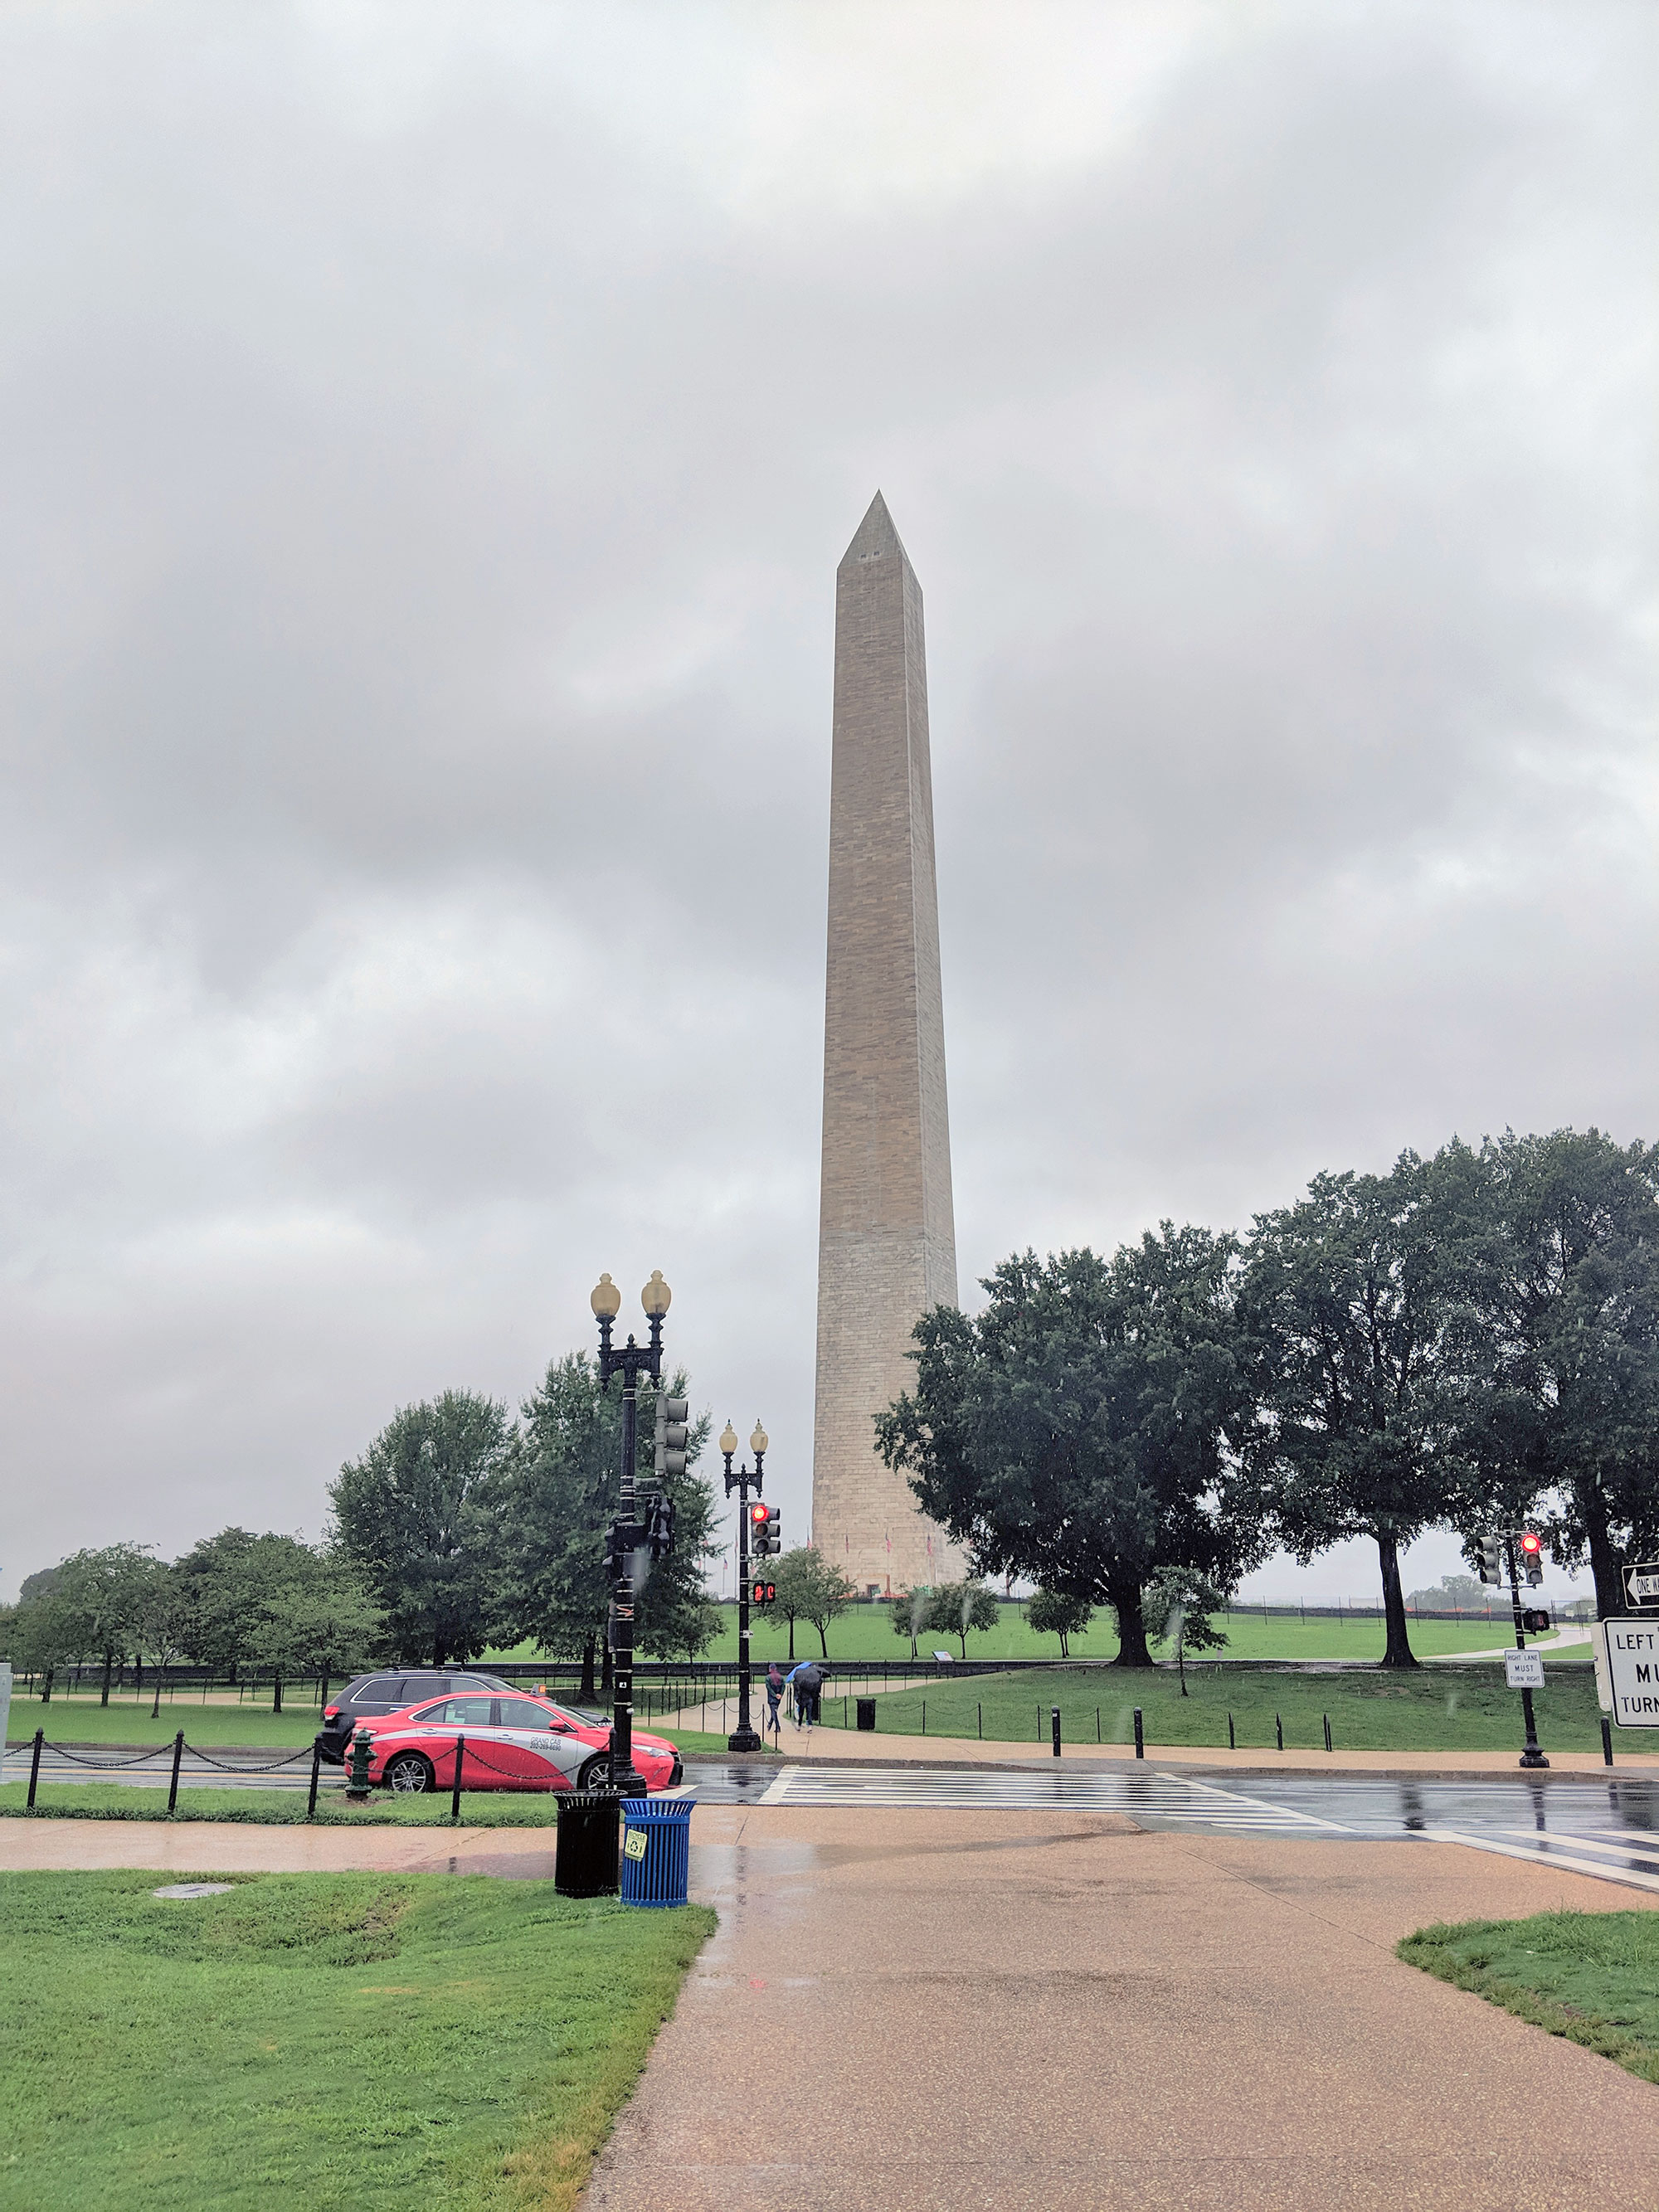 The Washington monument during a rainstorm.